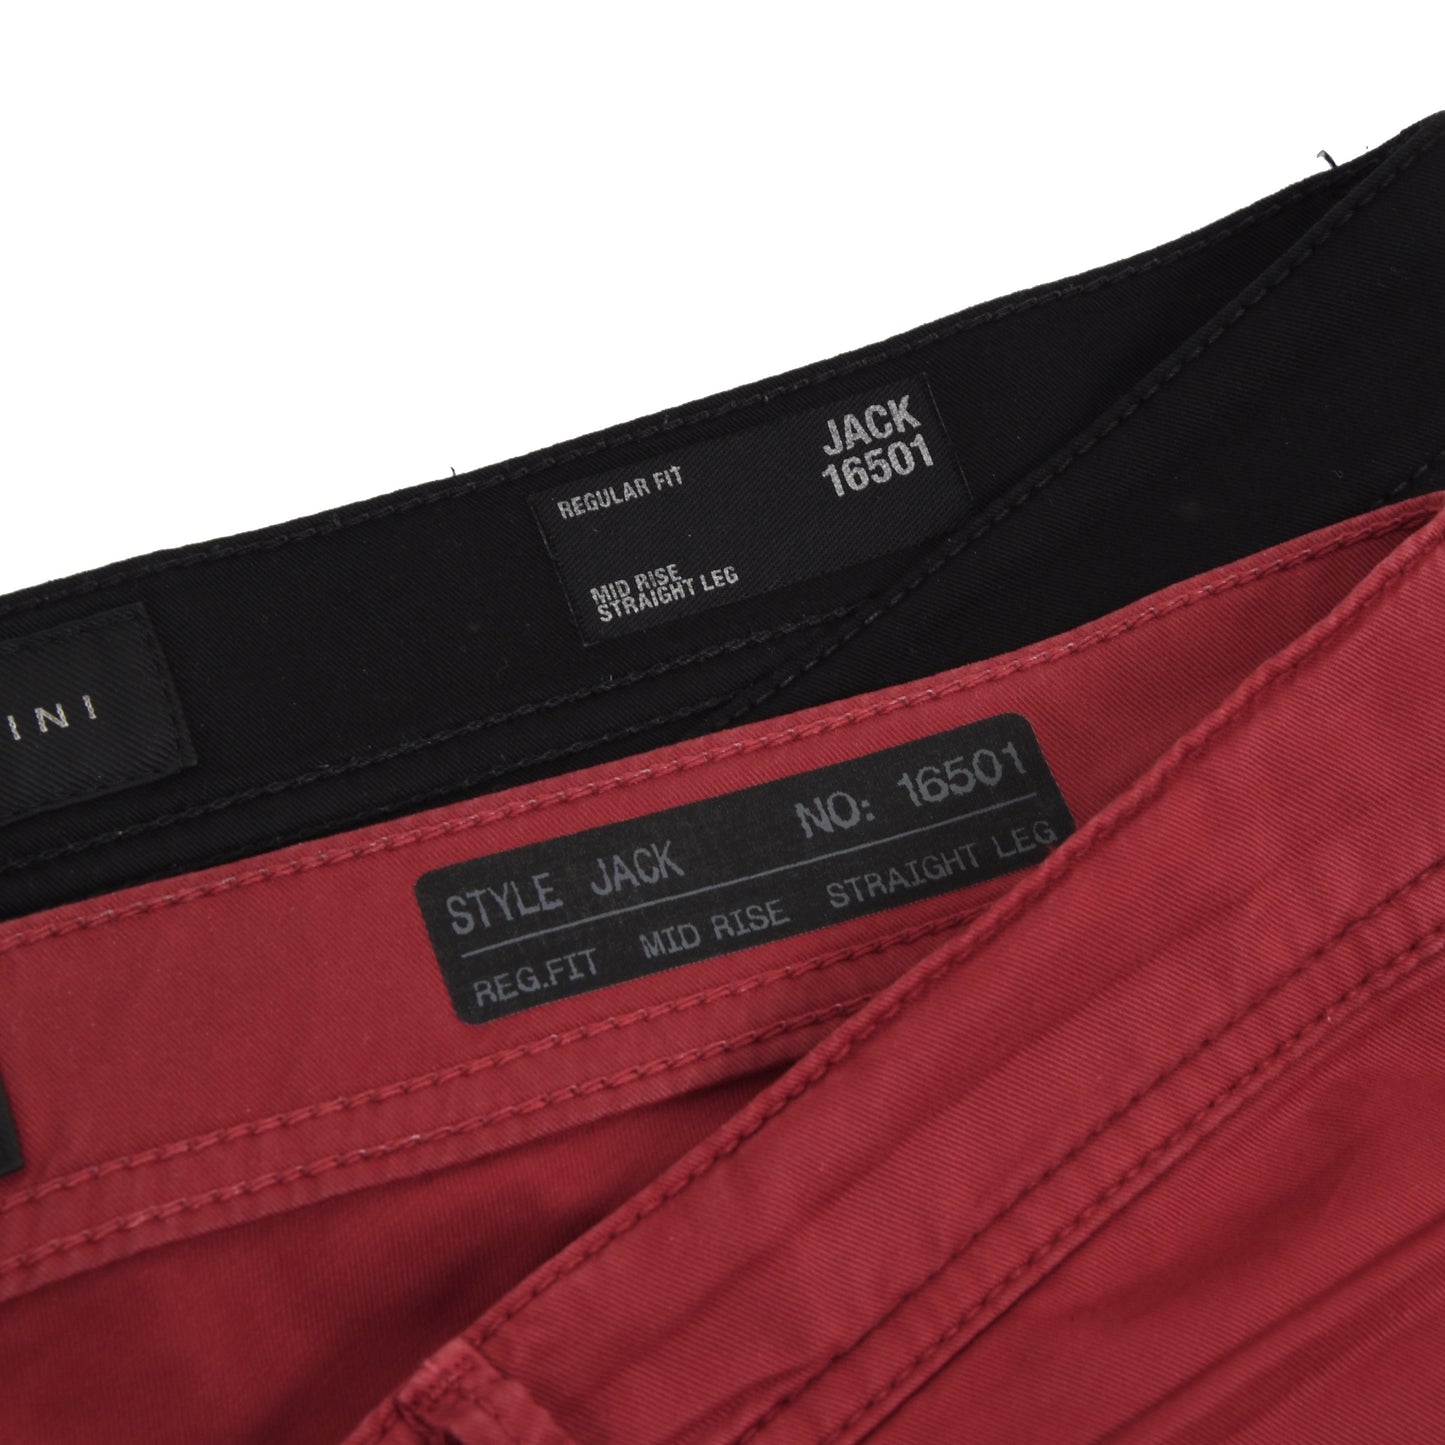 2x Baldessarini Jeans Size W34 L34 - Black & Red